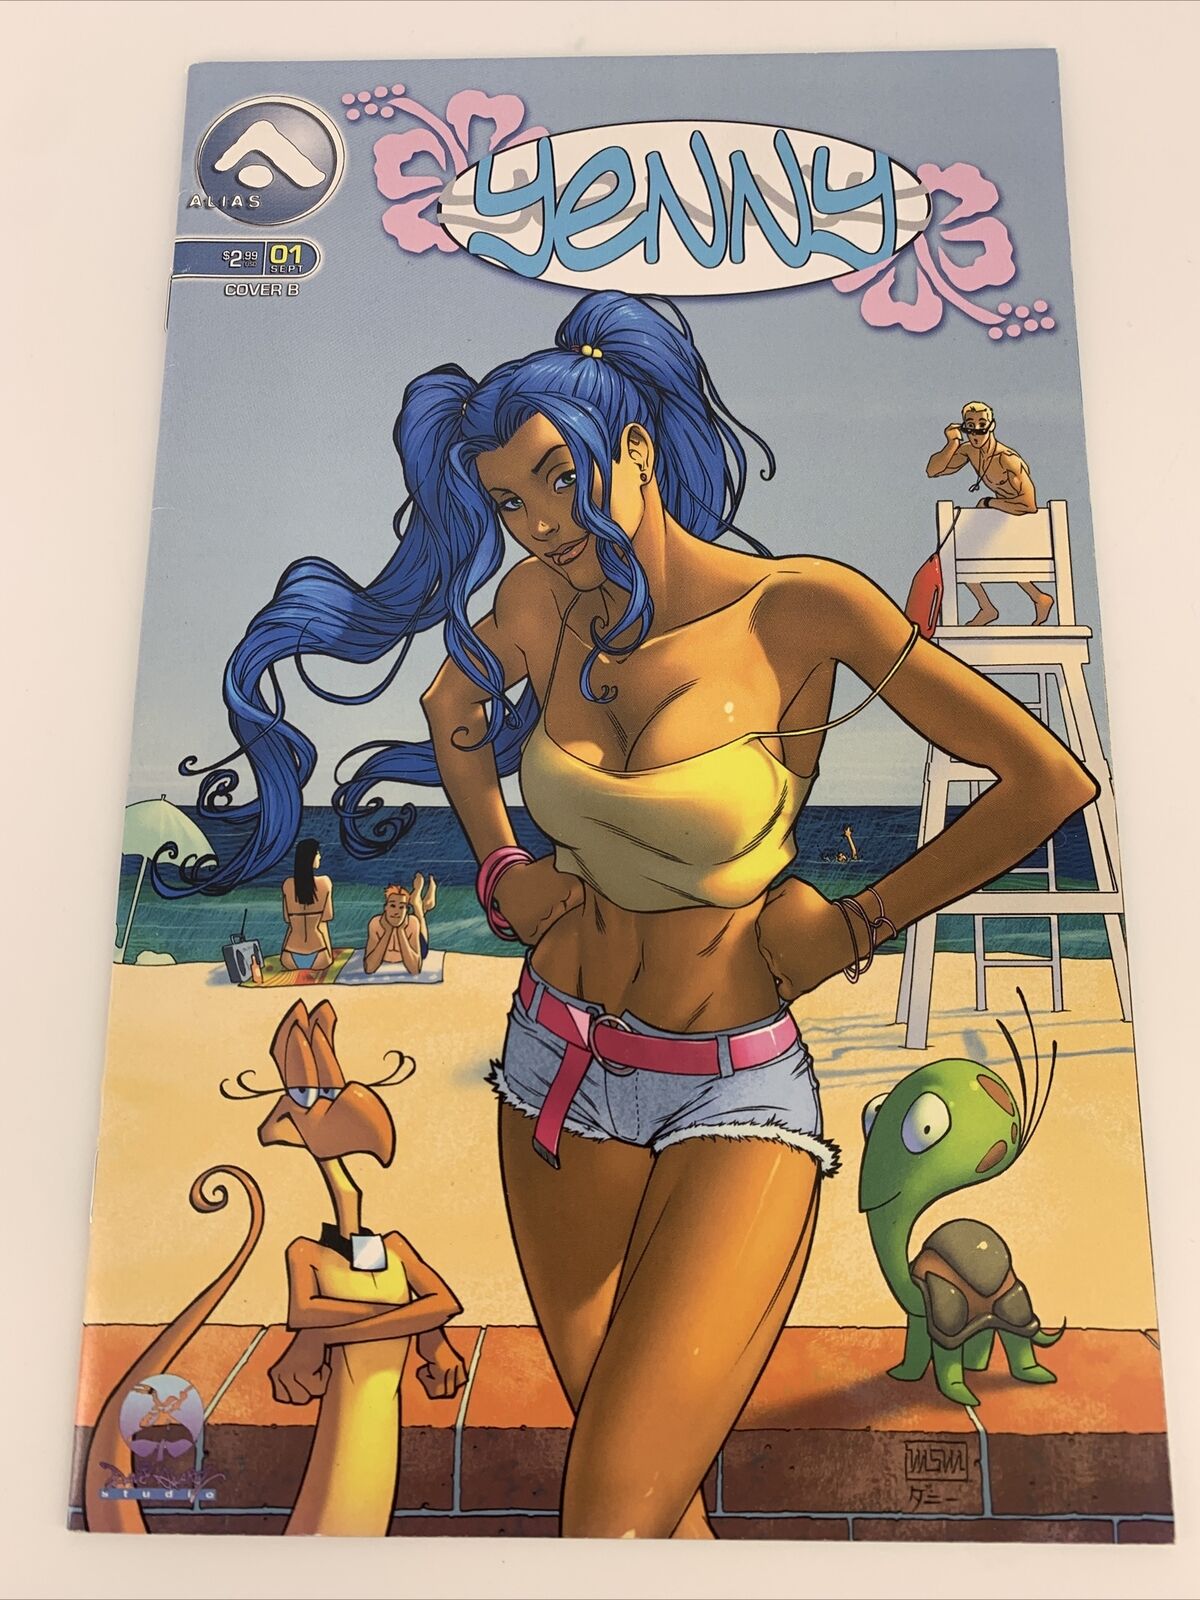 Yenny #1 September 2005 First Printing Cover B Alias Enterprises LLC. Comic VF+